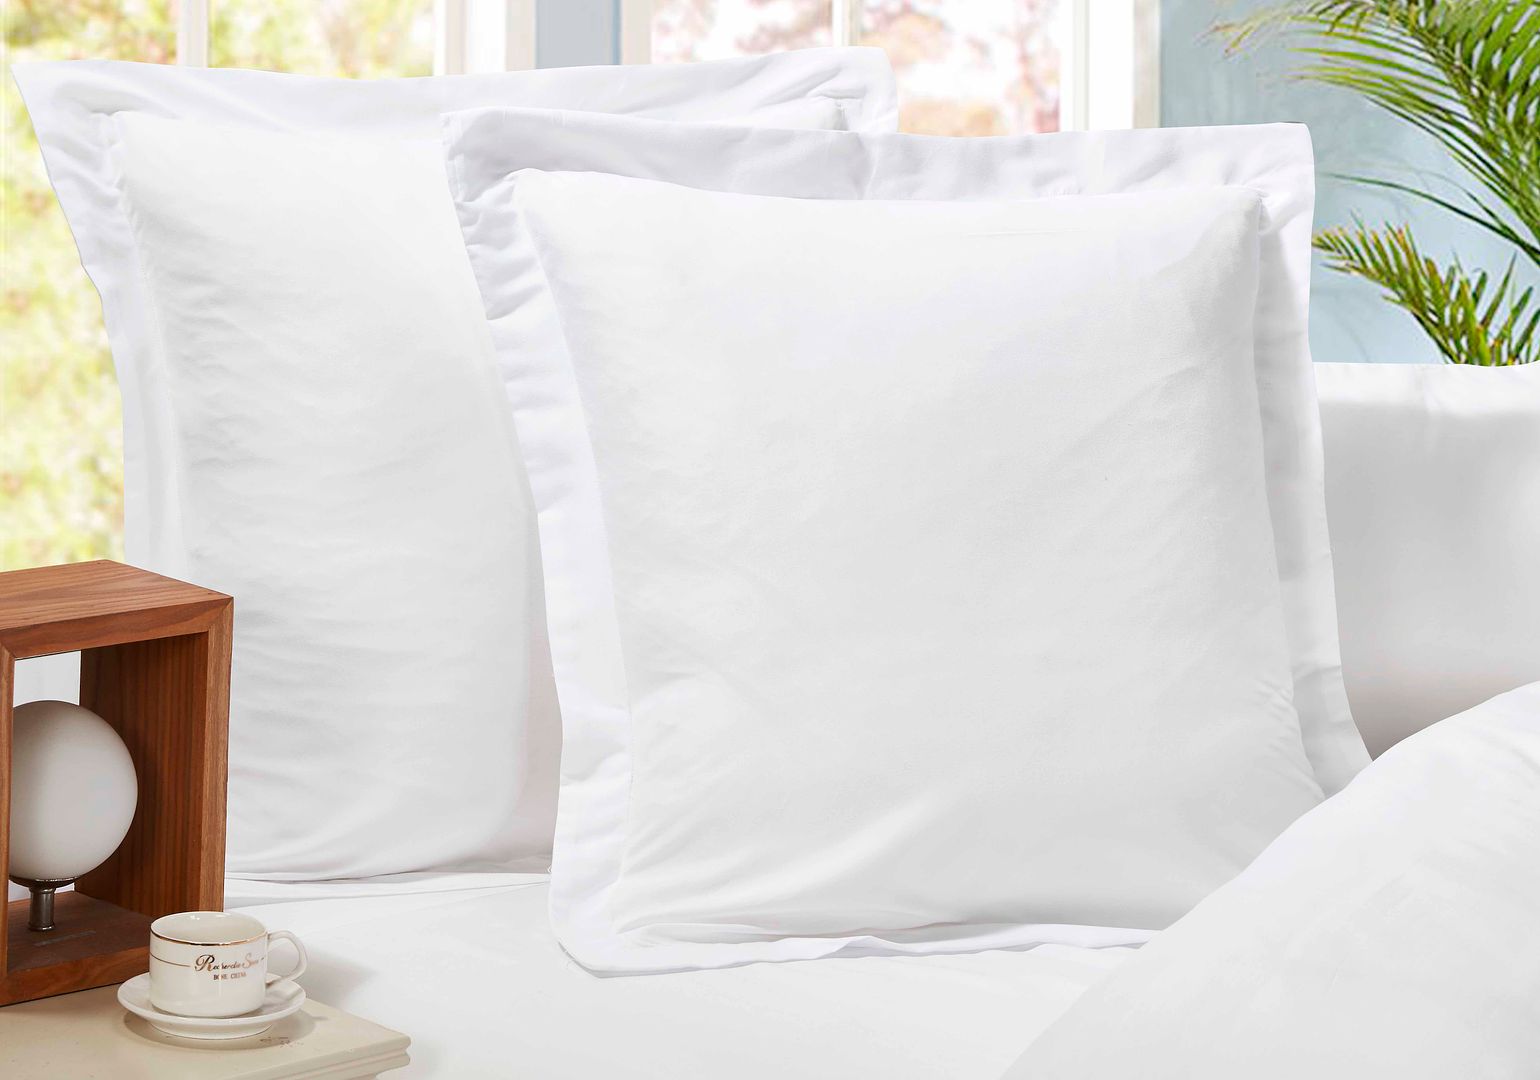 Super Soft Premium European Pillowcases 2-Pack - White